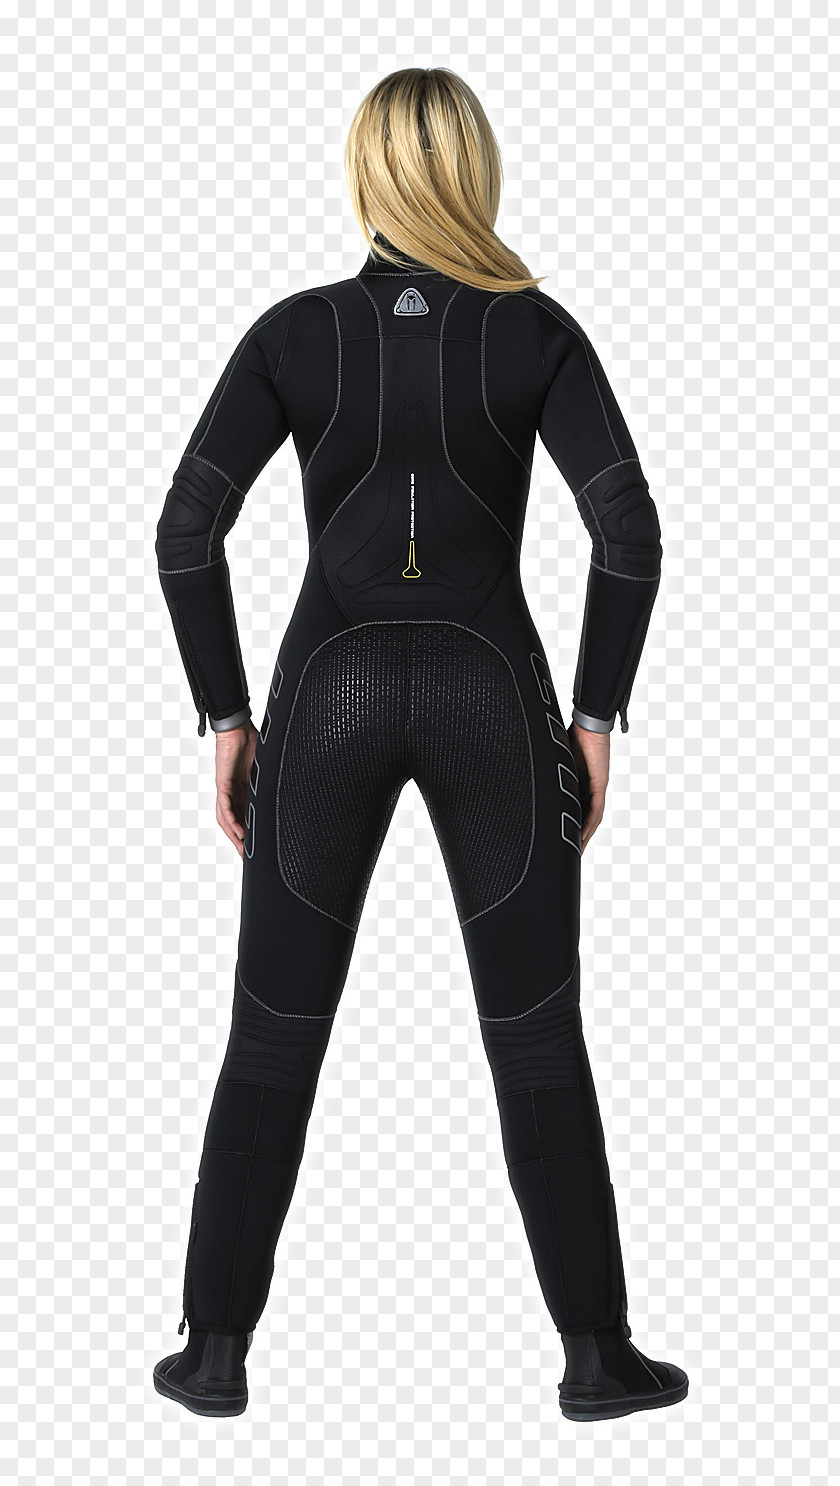 Zipper Wetsuit Diving Suit Scuba Underwater PNG